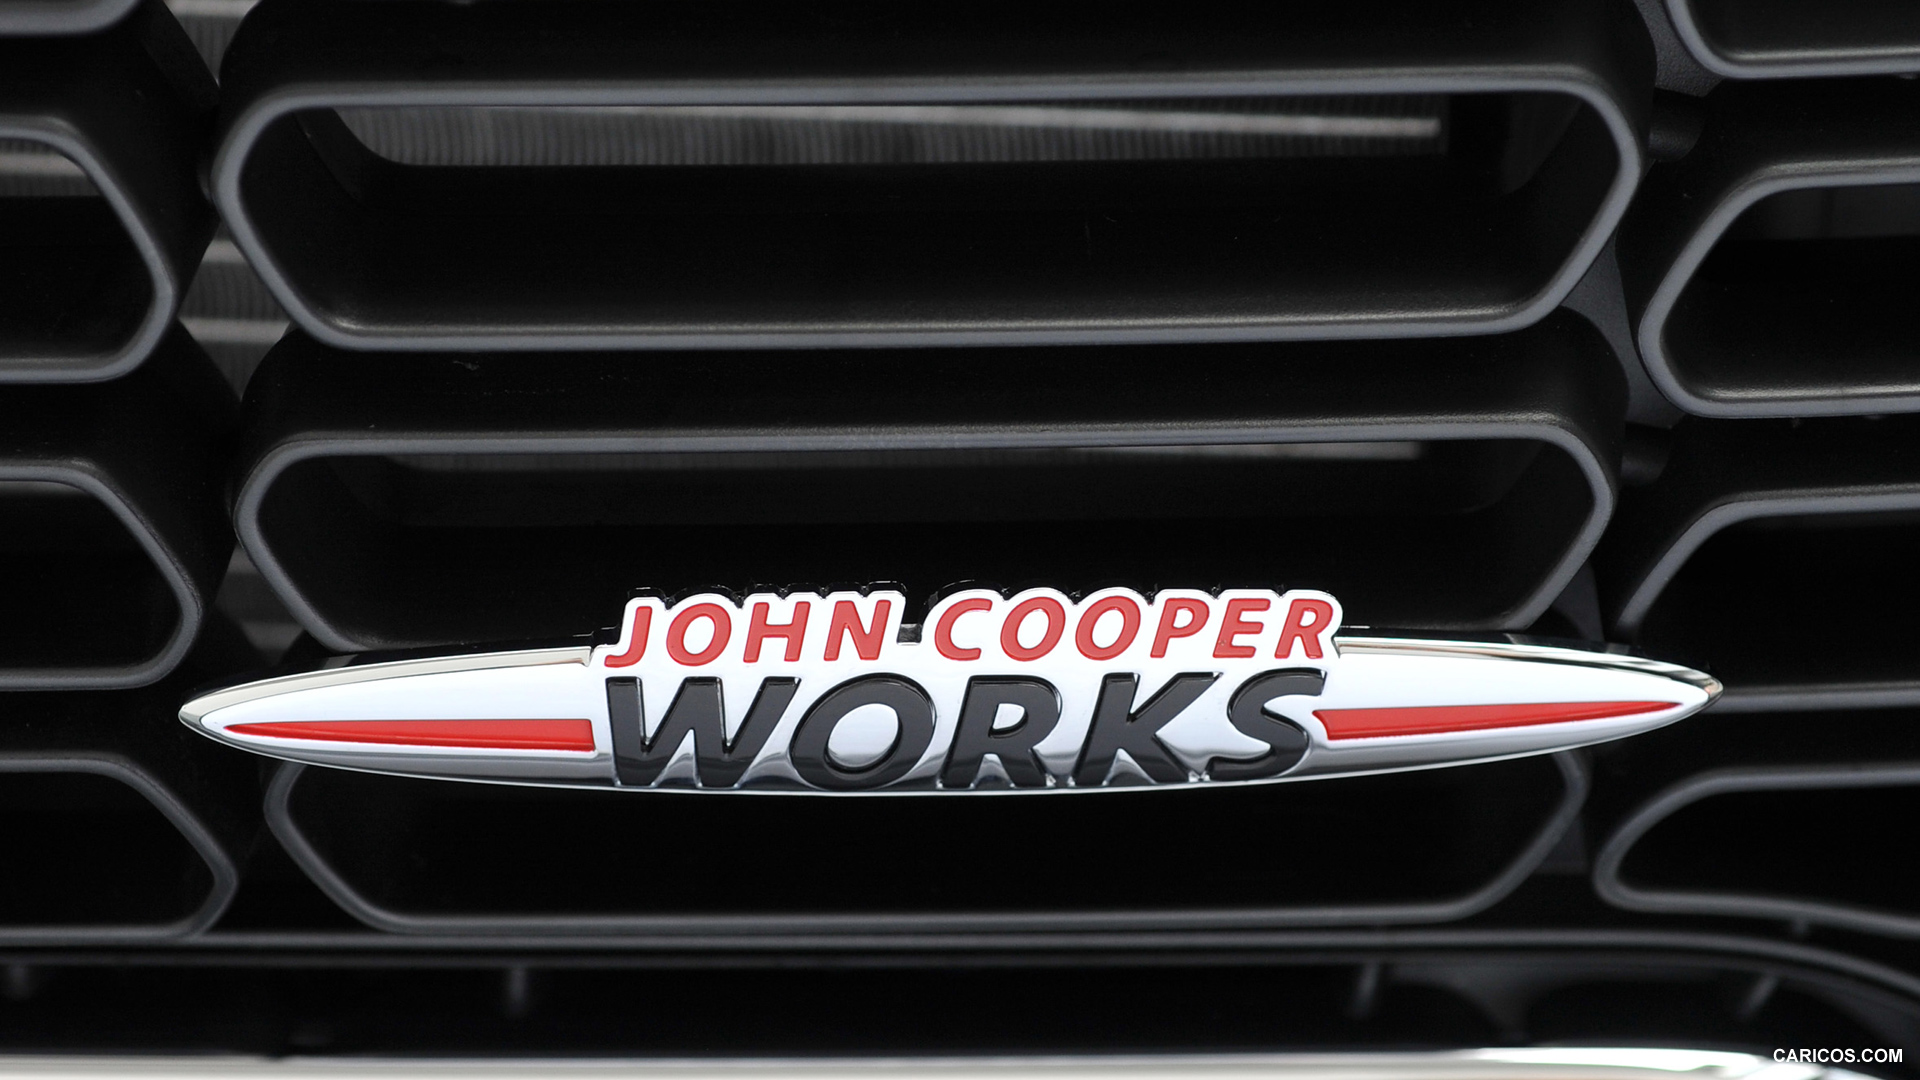 2013 MINI Countryman John Cooper works  - Detail, #165 of 234